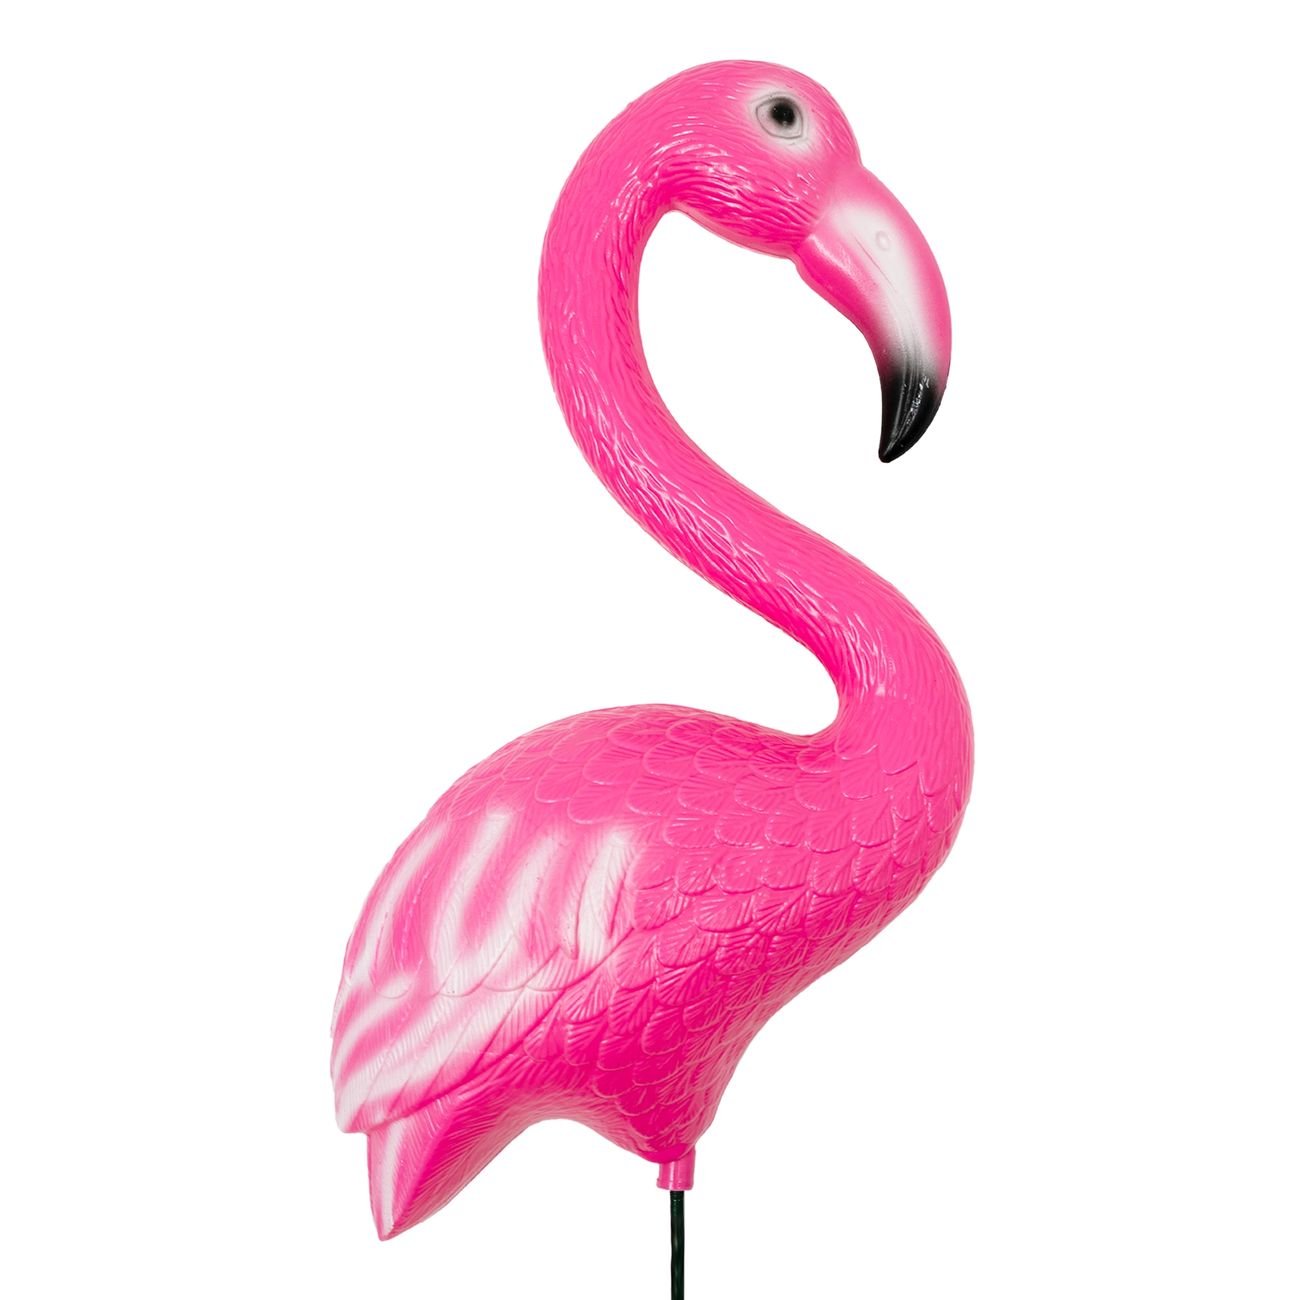 tradgardspinne-flamingo-93222-1